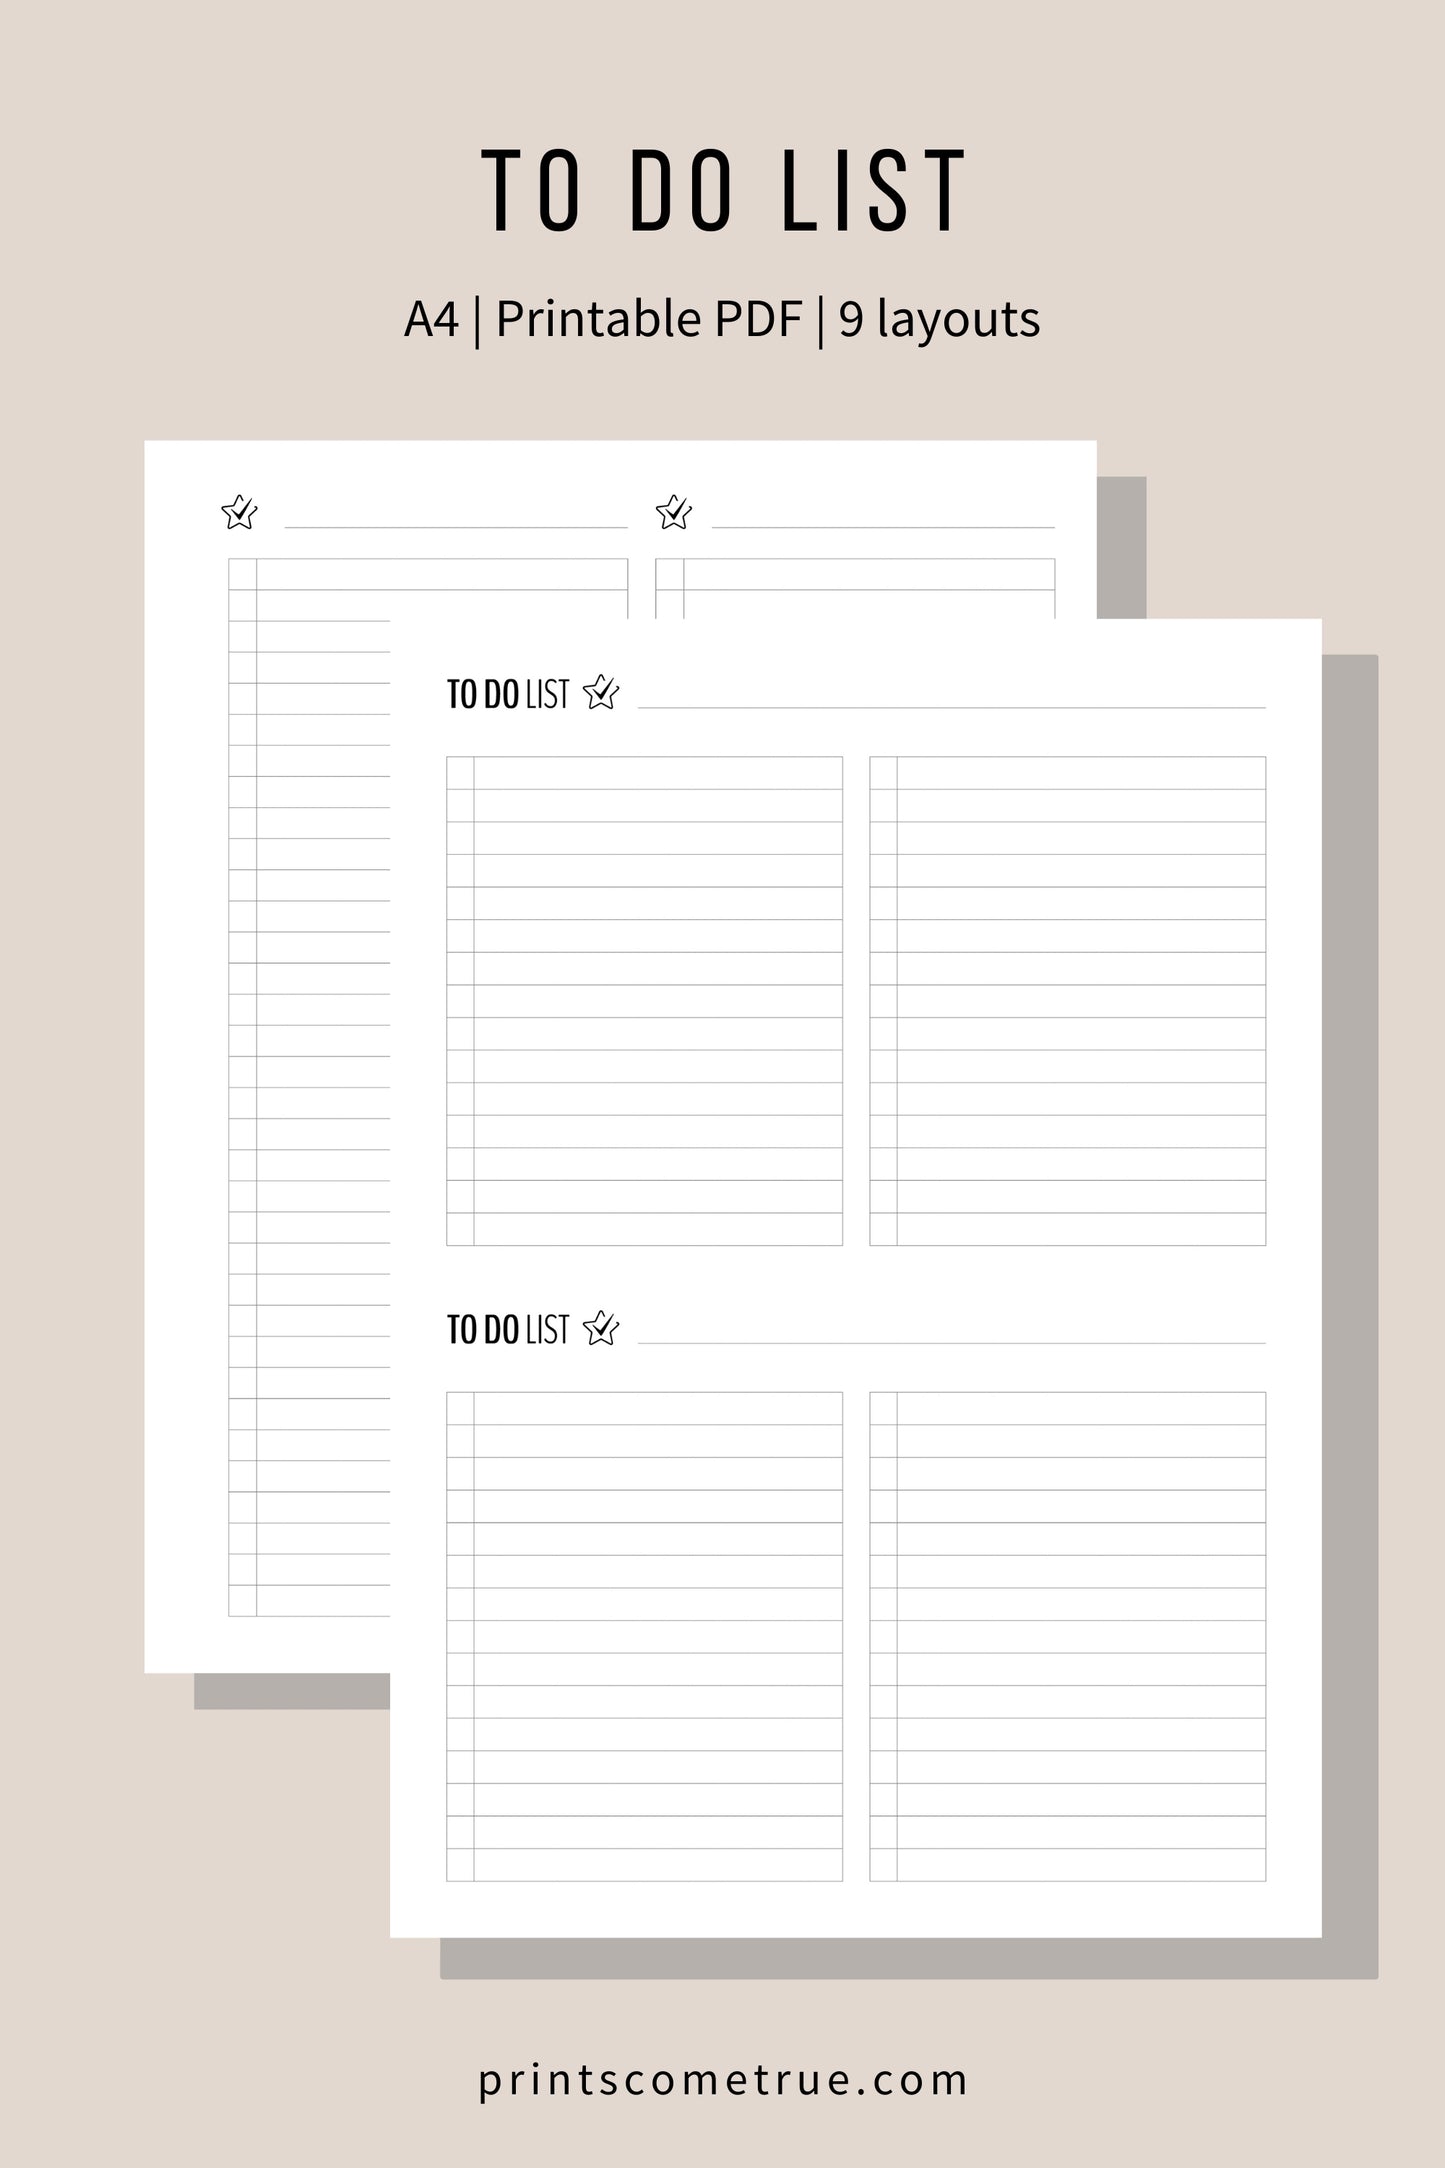 To Do List - Printable Planner A4 Prev